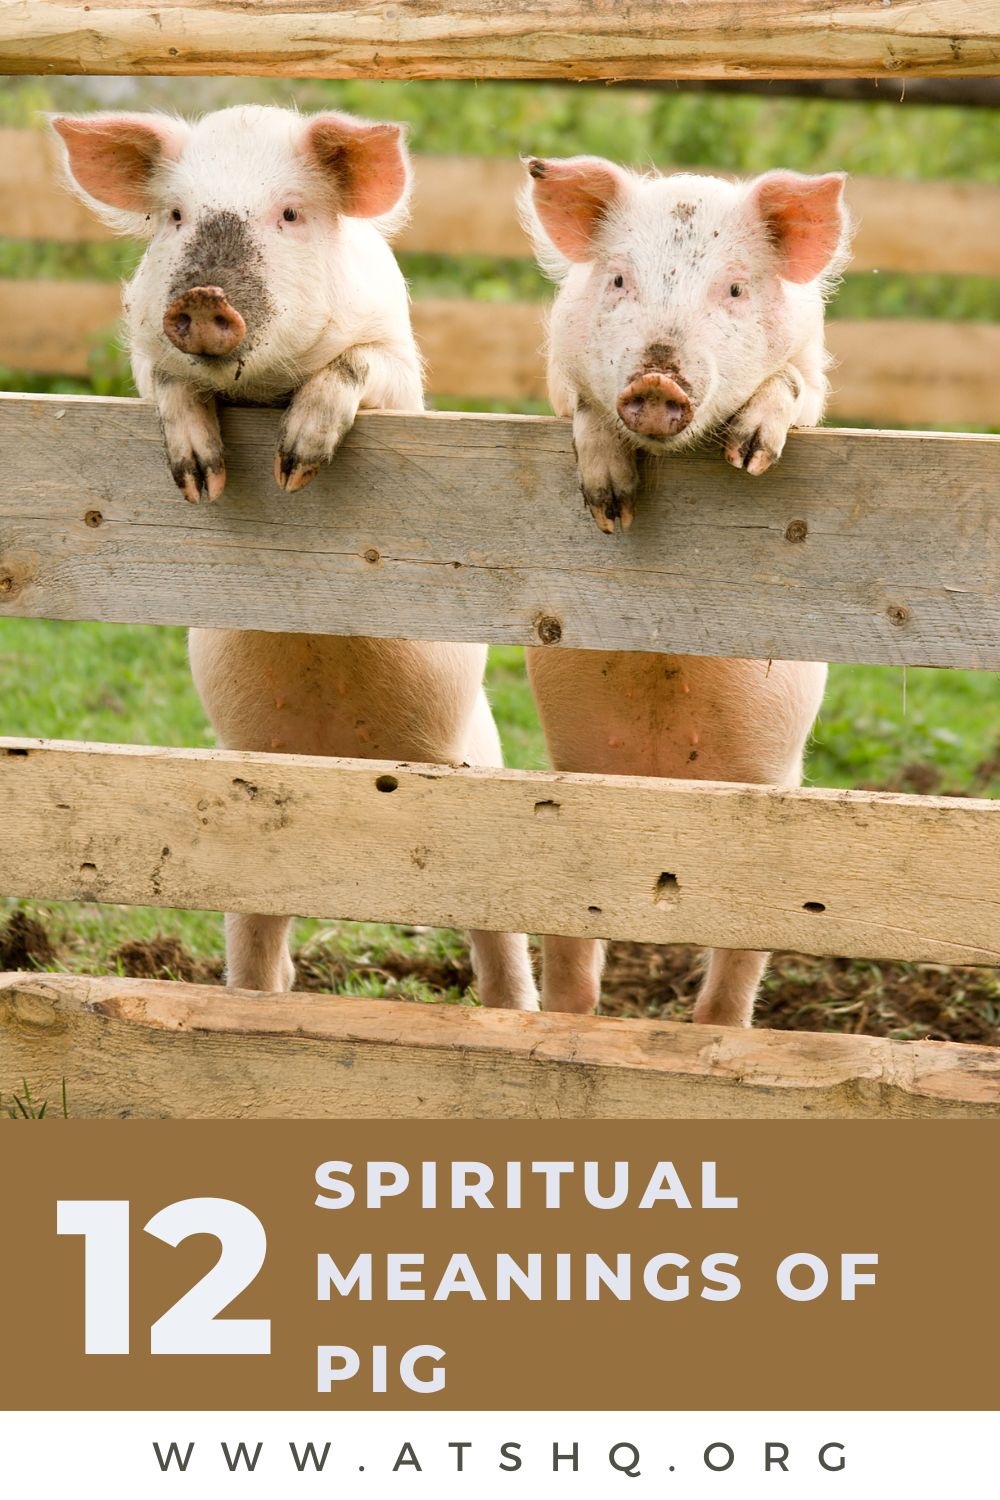 Pig Symbolism: 12 Spiritual Meanings of Pig